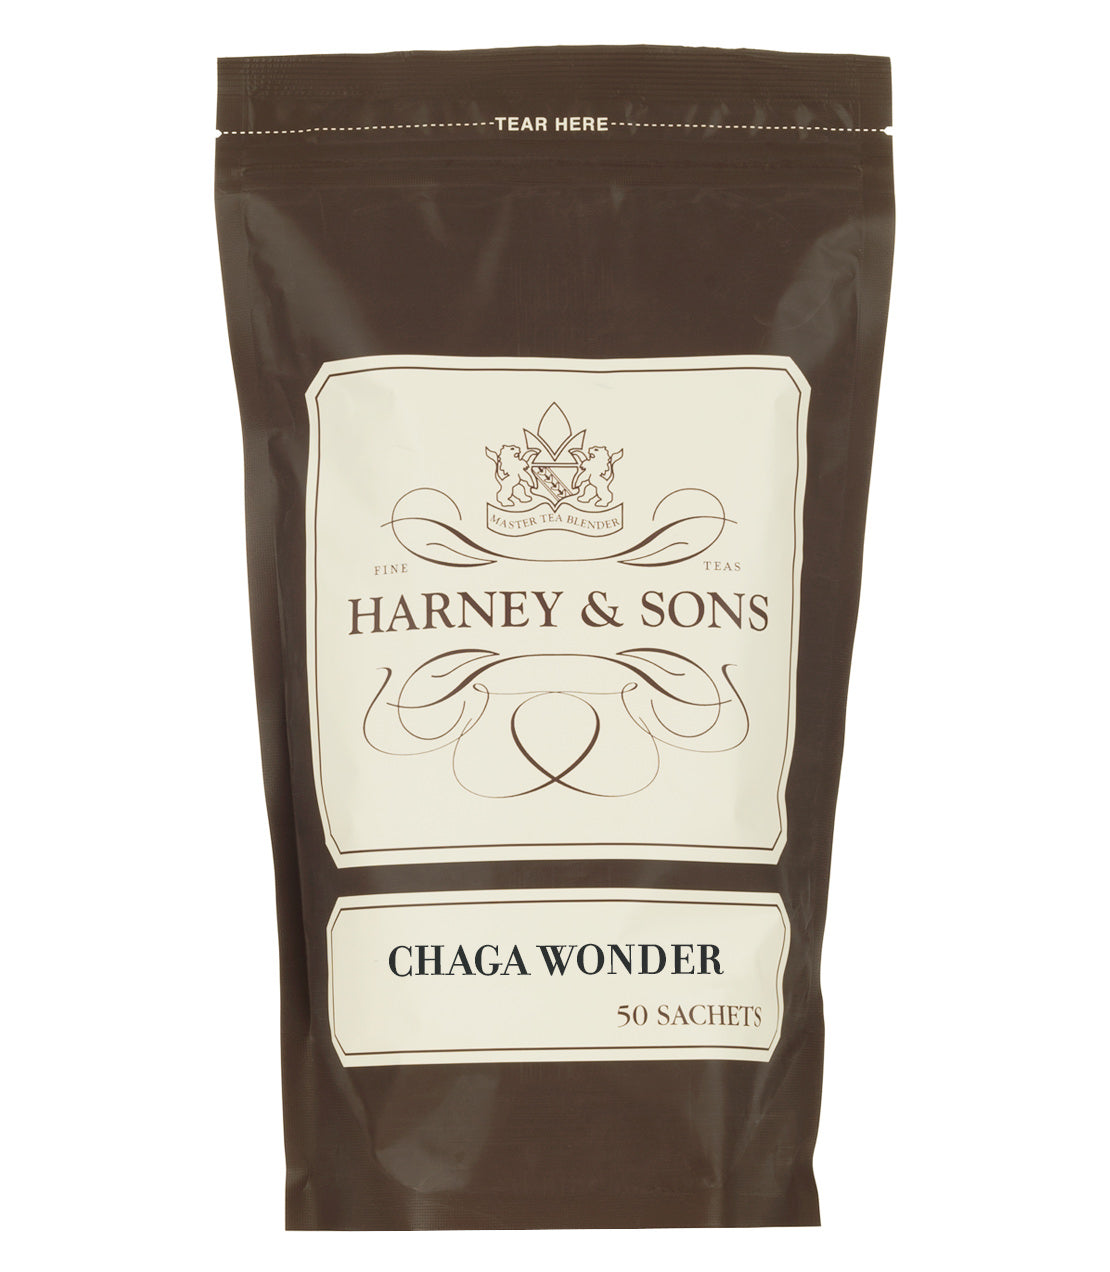 Chaga Wonder - Sachets Bag of 50 Sachets - Harney & Sons Fine Teas